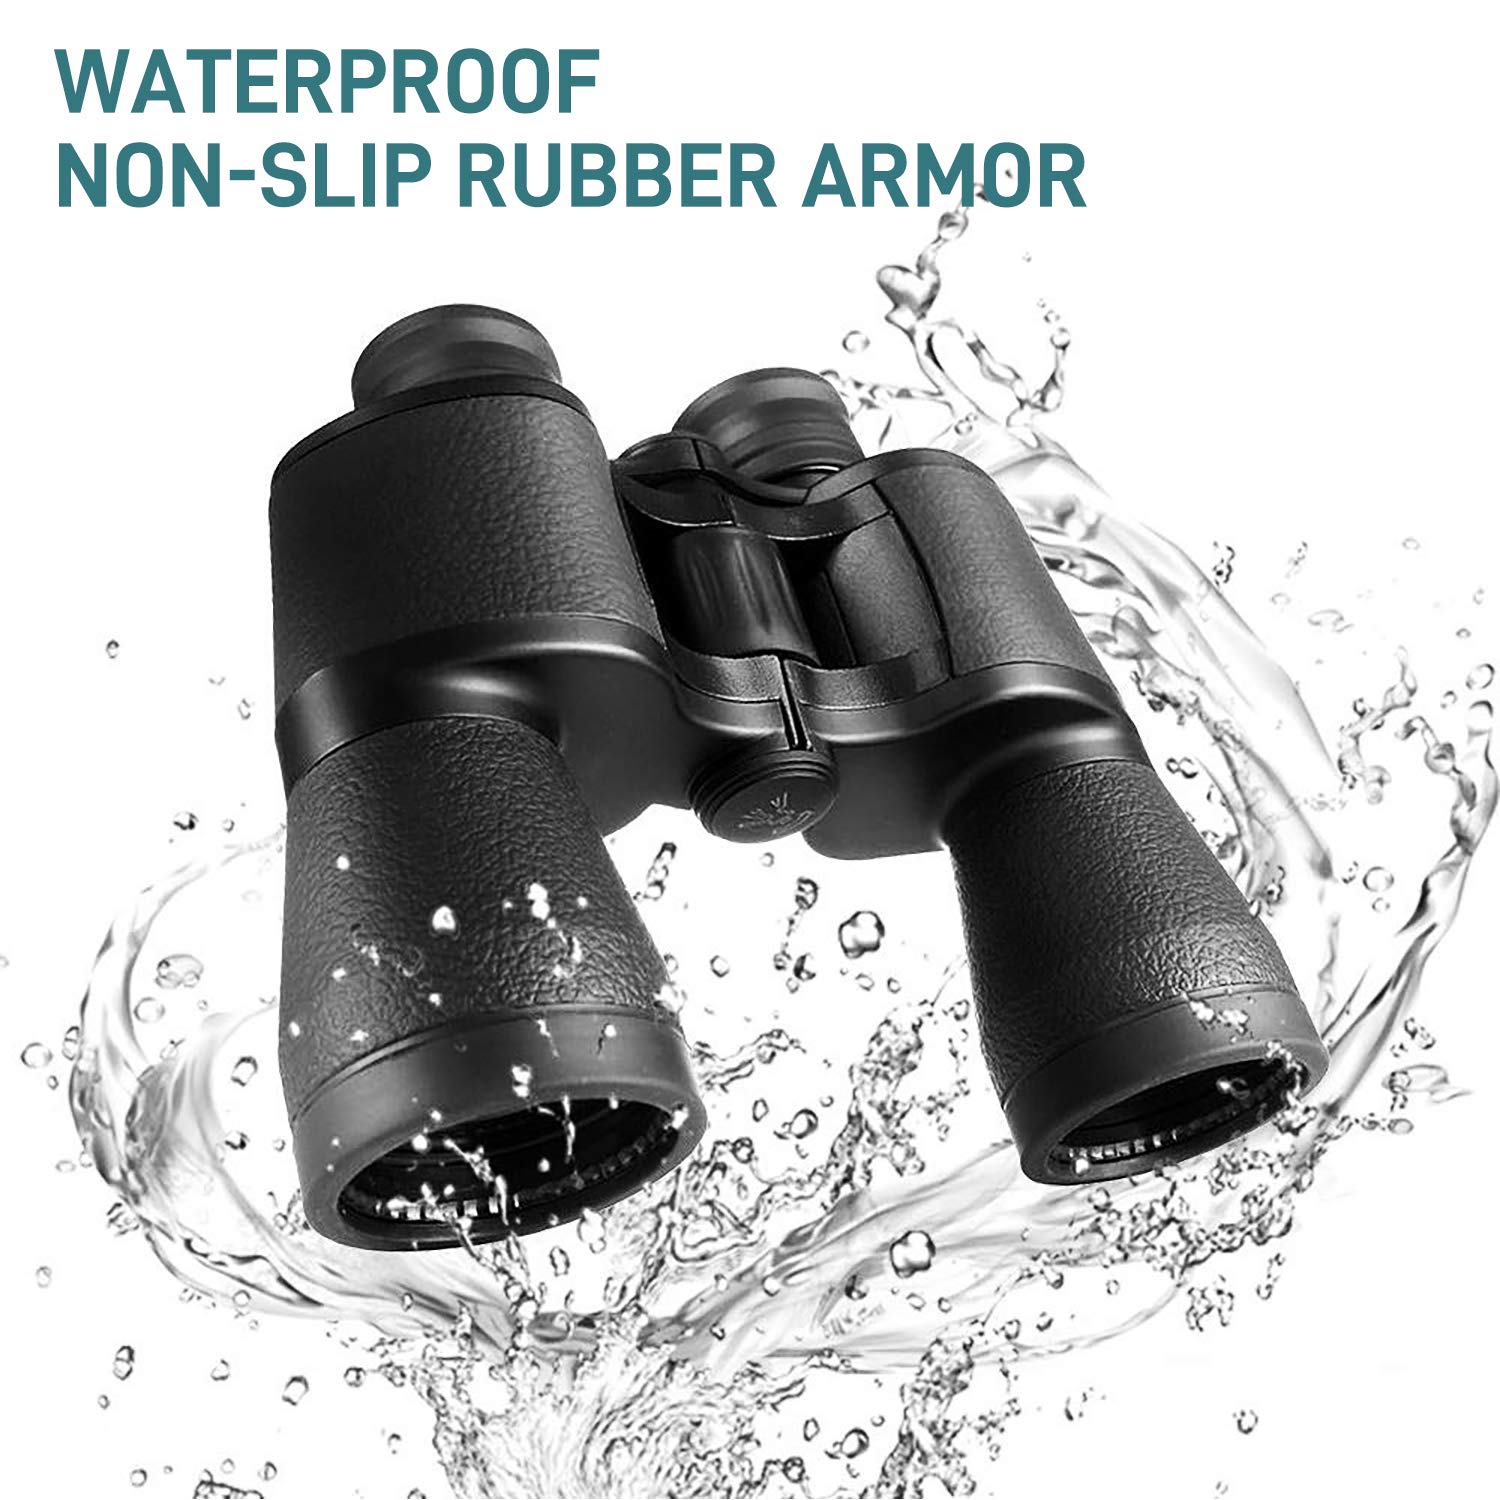 Bwrethay 20x50 HD Binoculars for Adults High Powered Compact Professional/Waterproof Binoculars Durable & Clear BAK4 Prism FMC Lens,Hunting Binoculars for Adults Bird Watching Travel Outdoor Sports